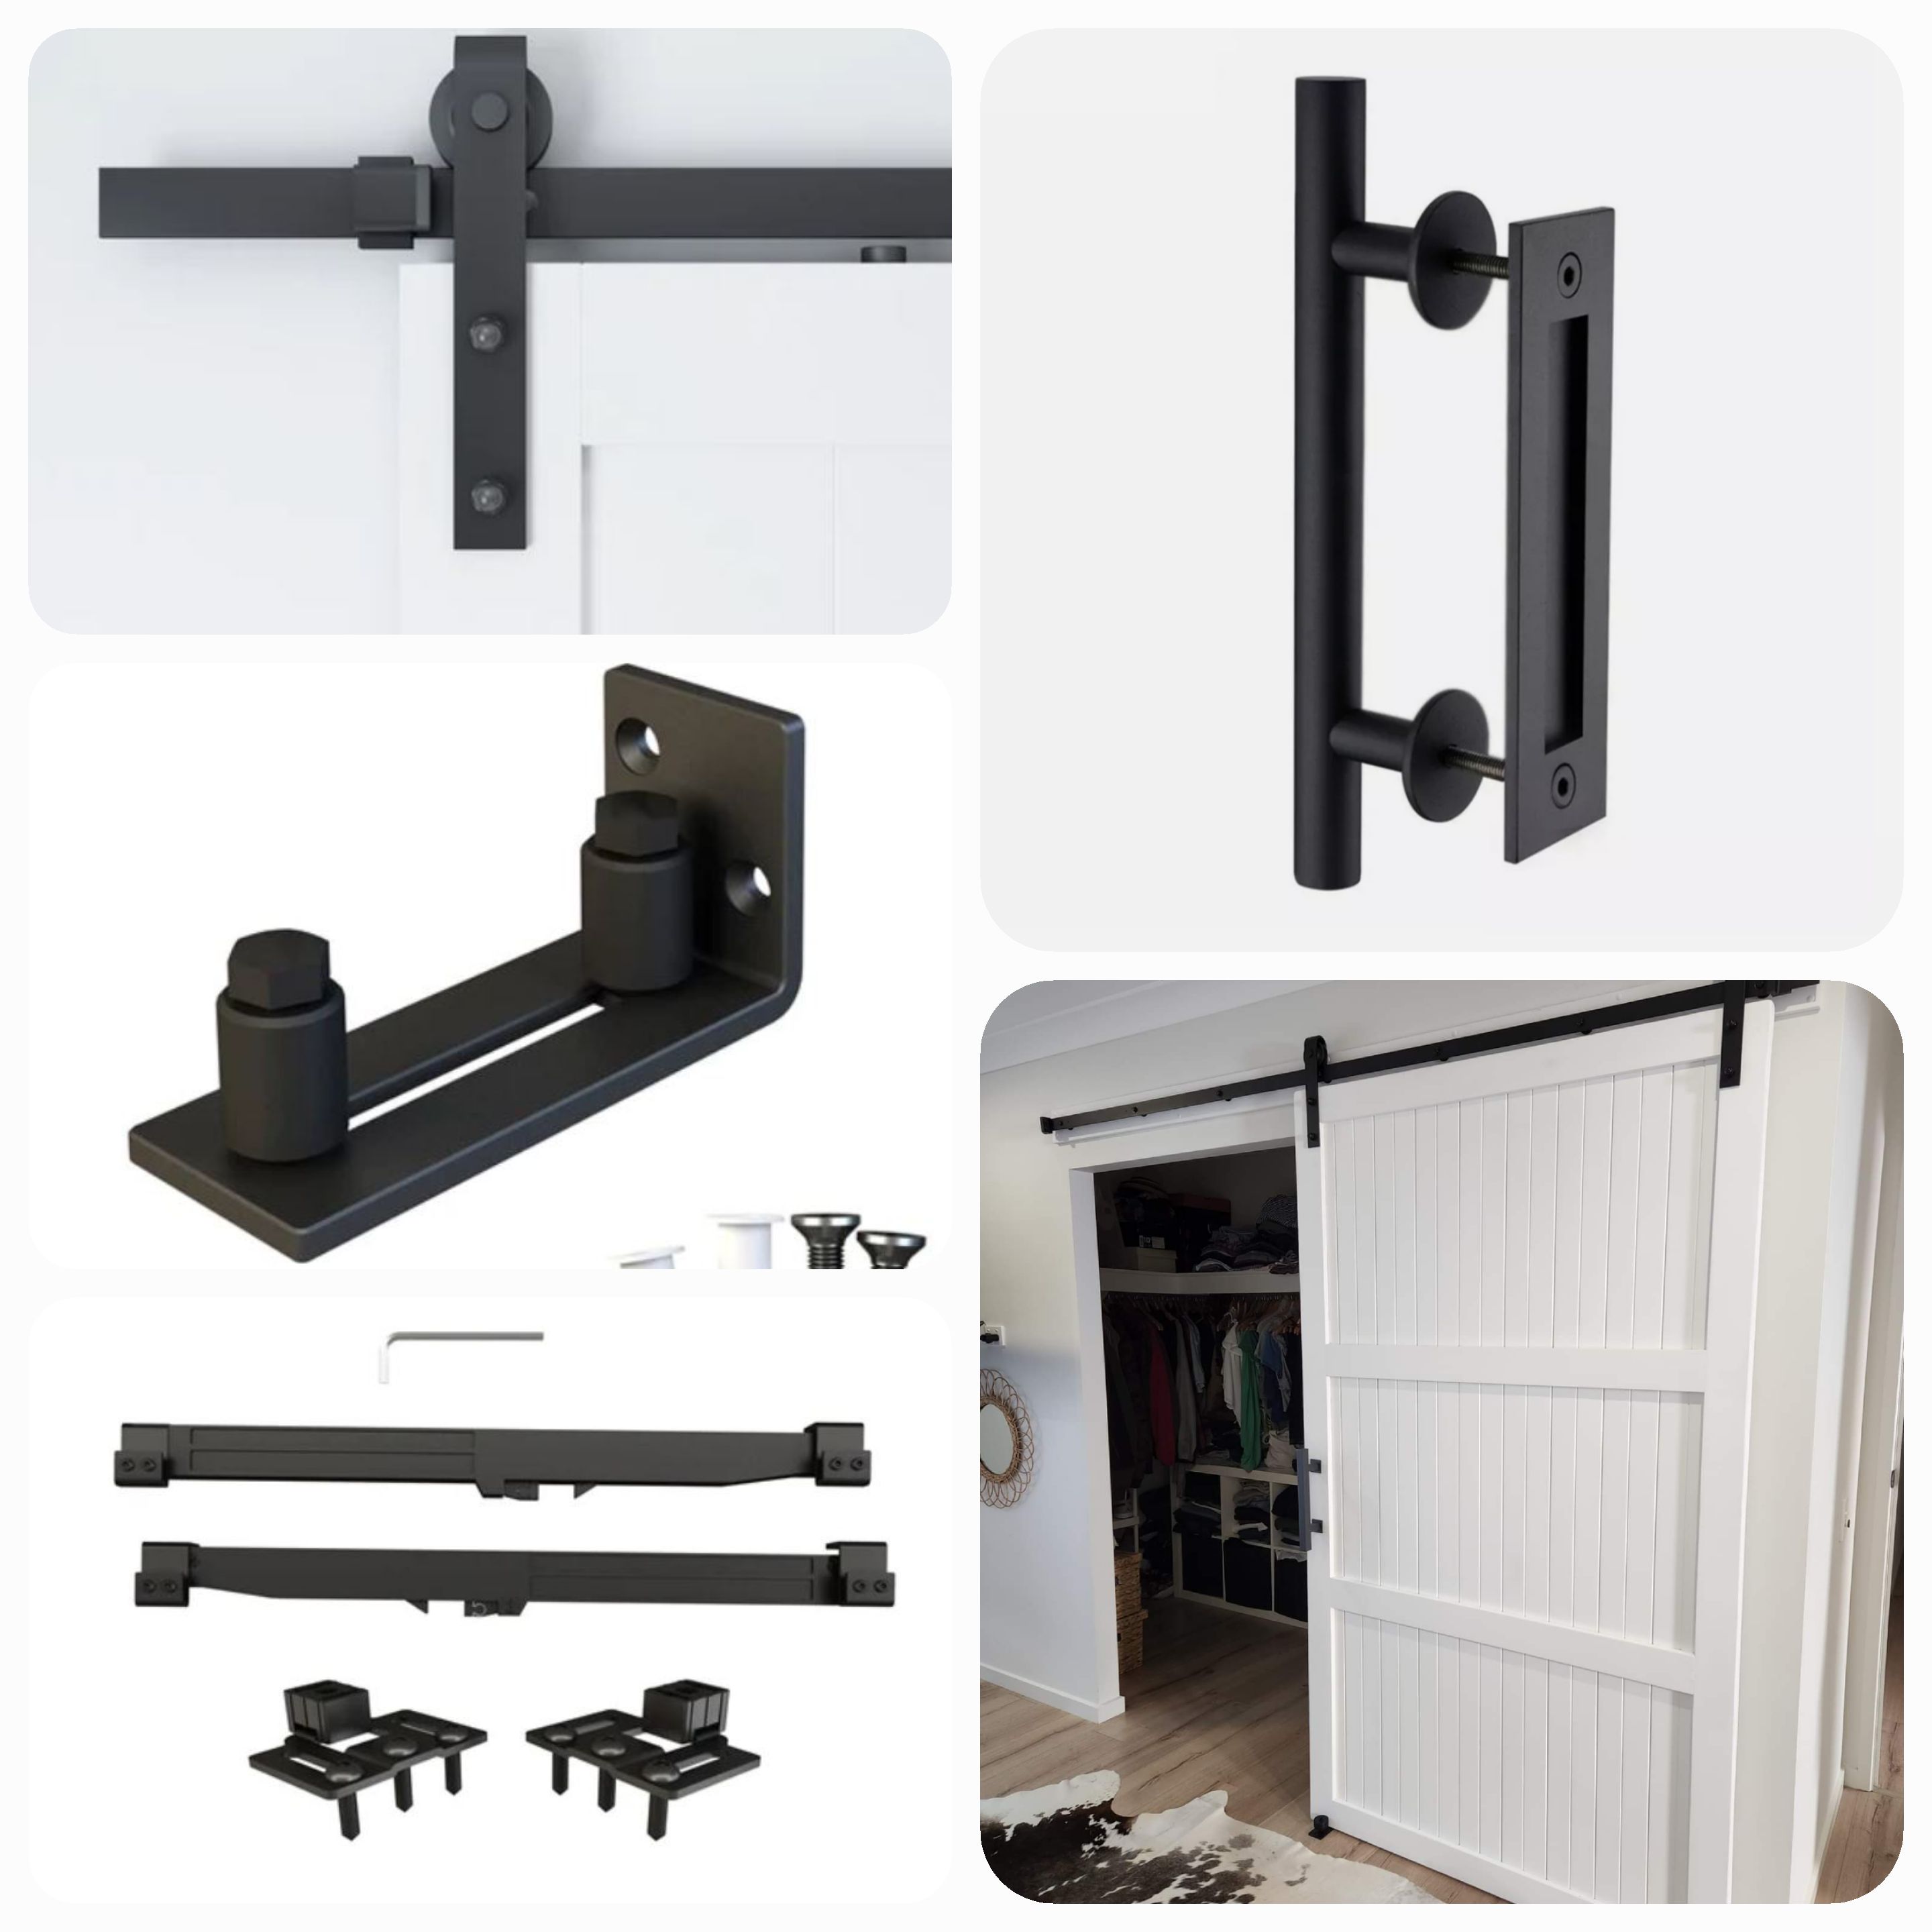 Black barn door hardware kits